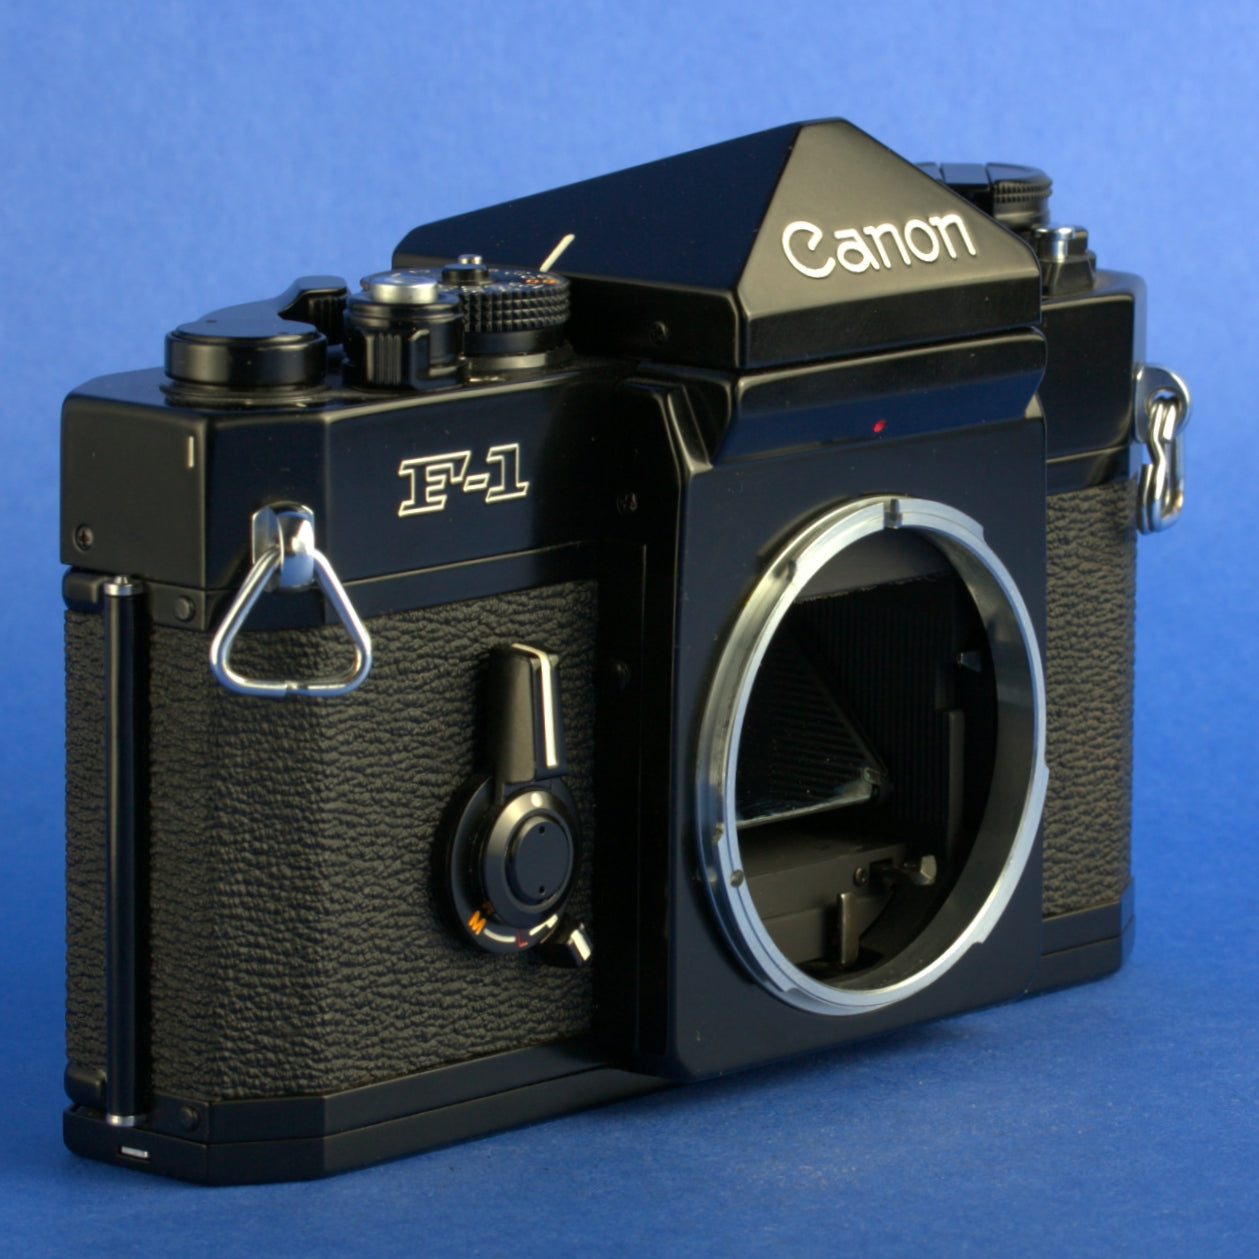 Stunning 1974 Canon F-1 Film Camera Body Near Mint Condition